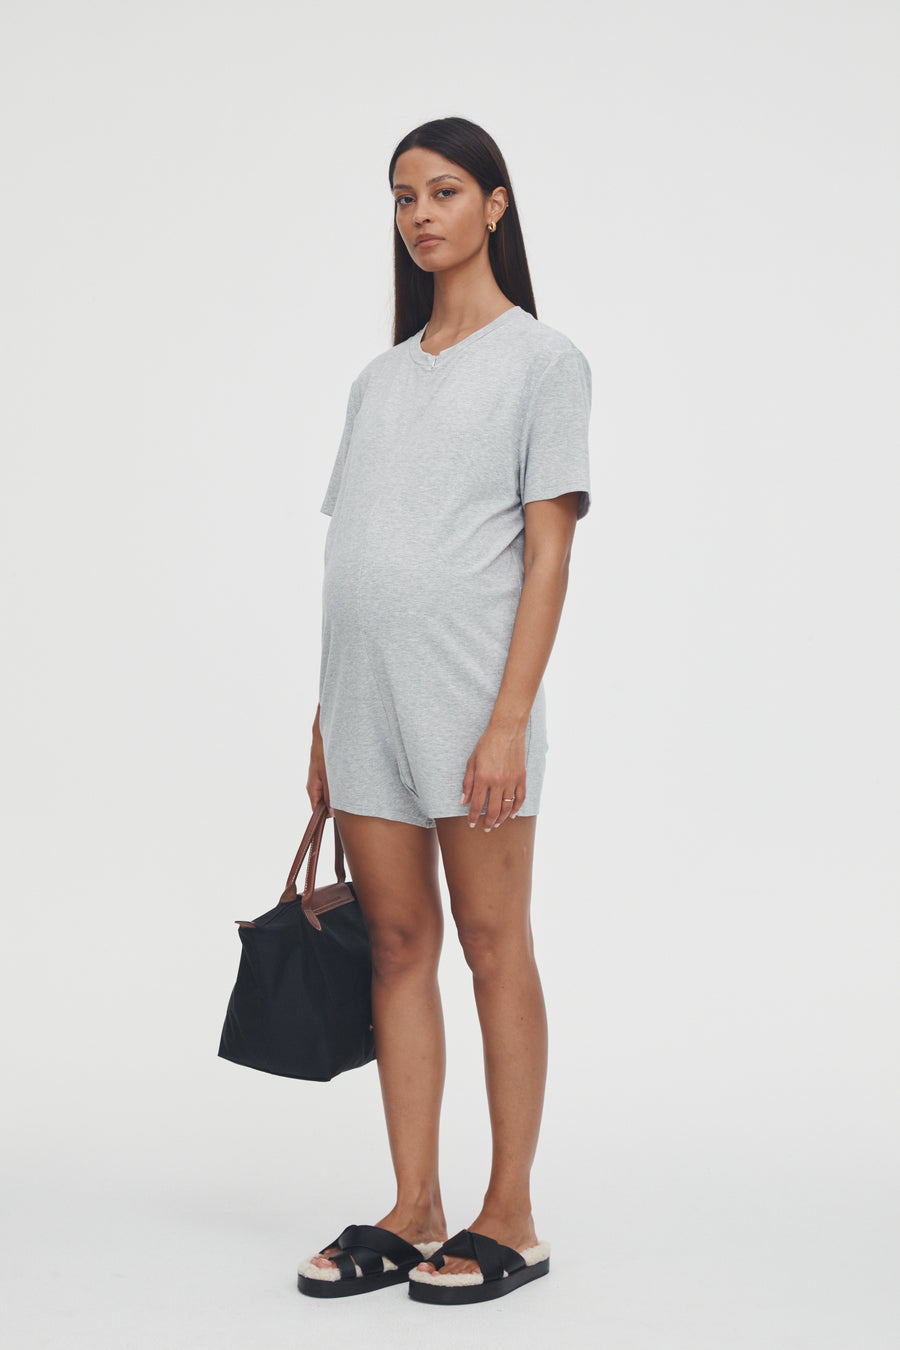 Maternity Jumpsuit (Grey) 4